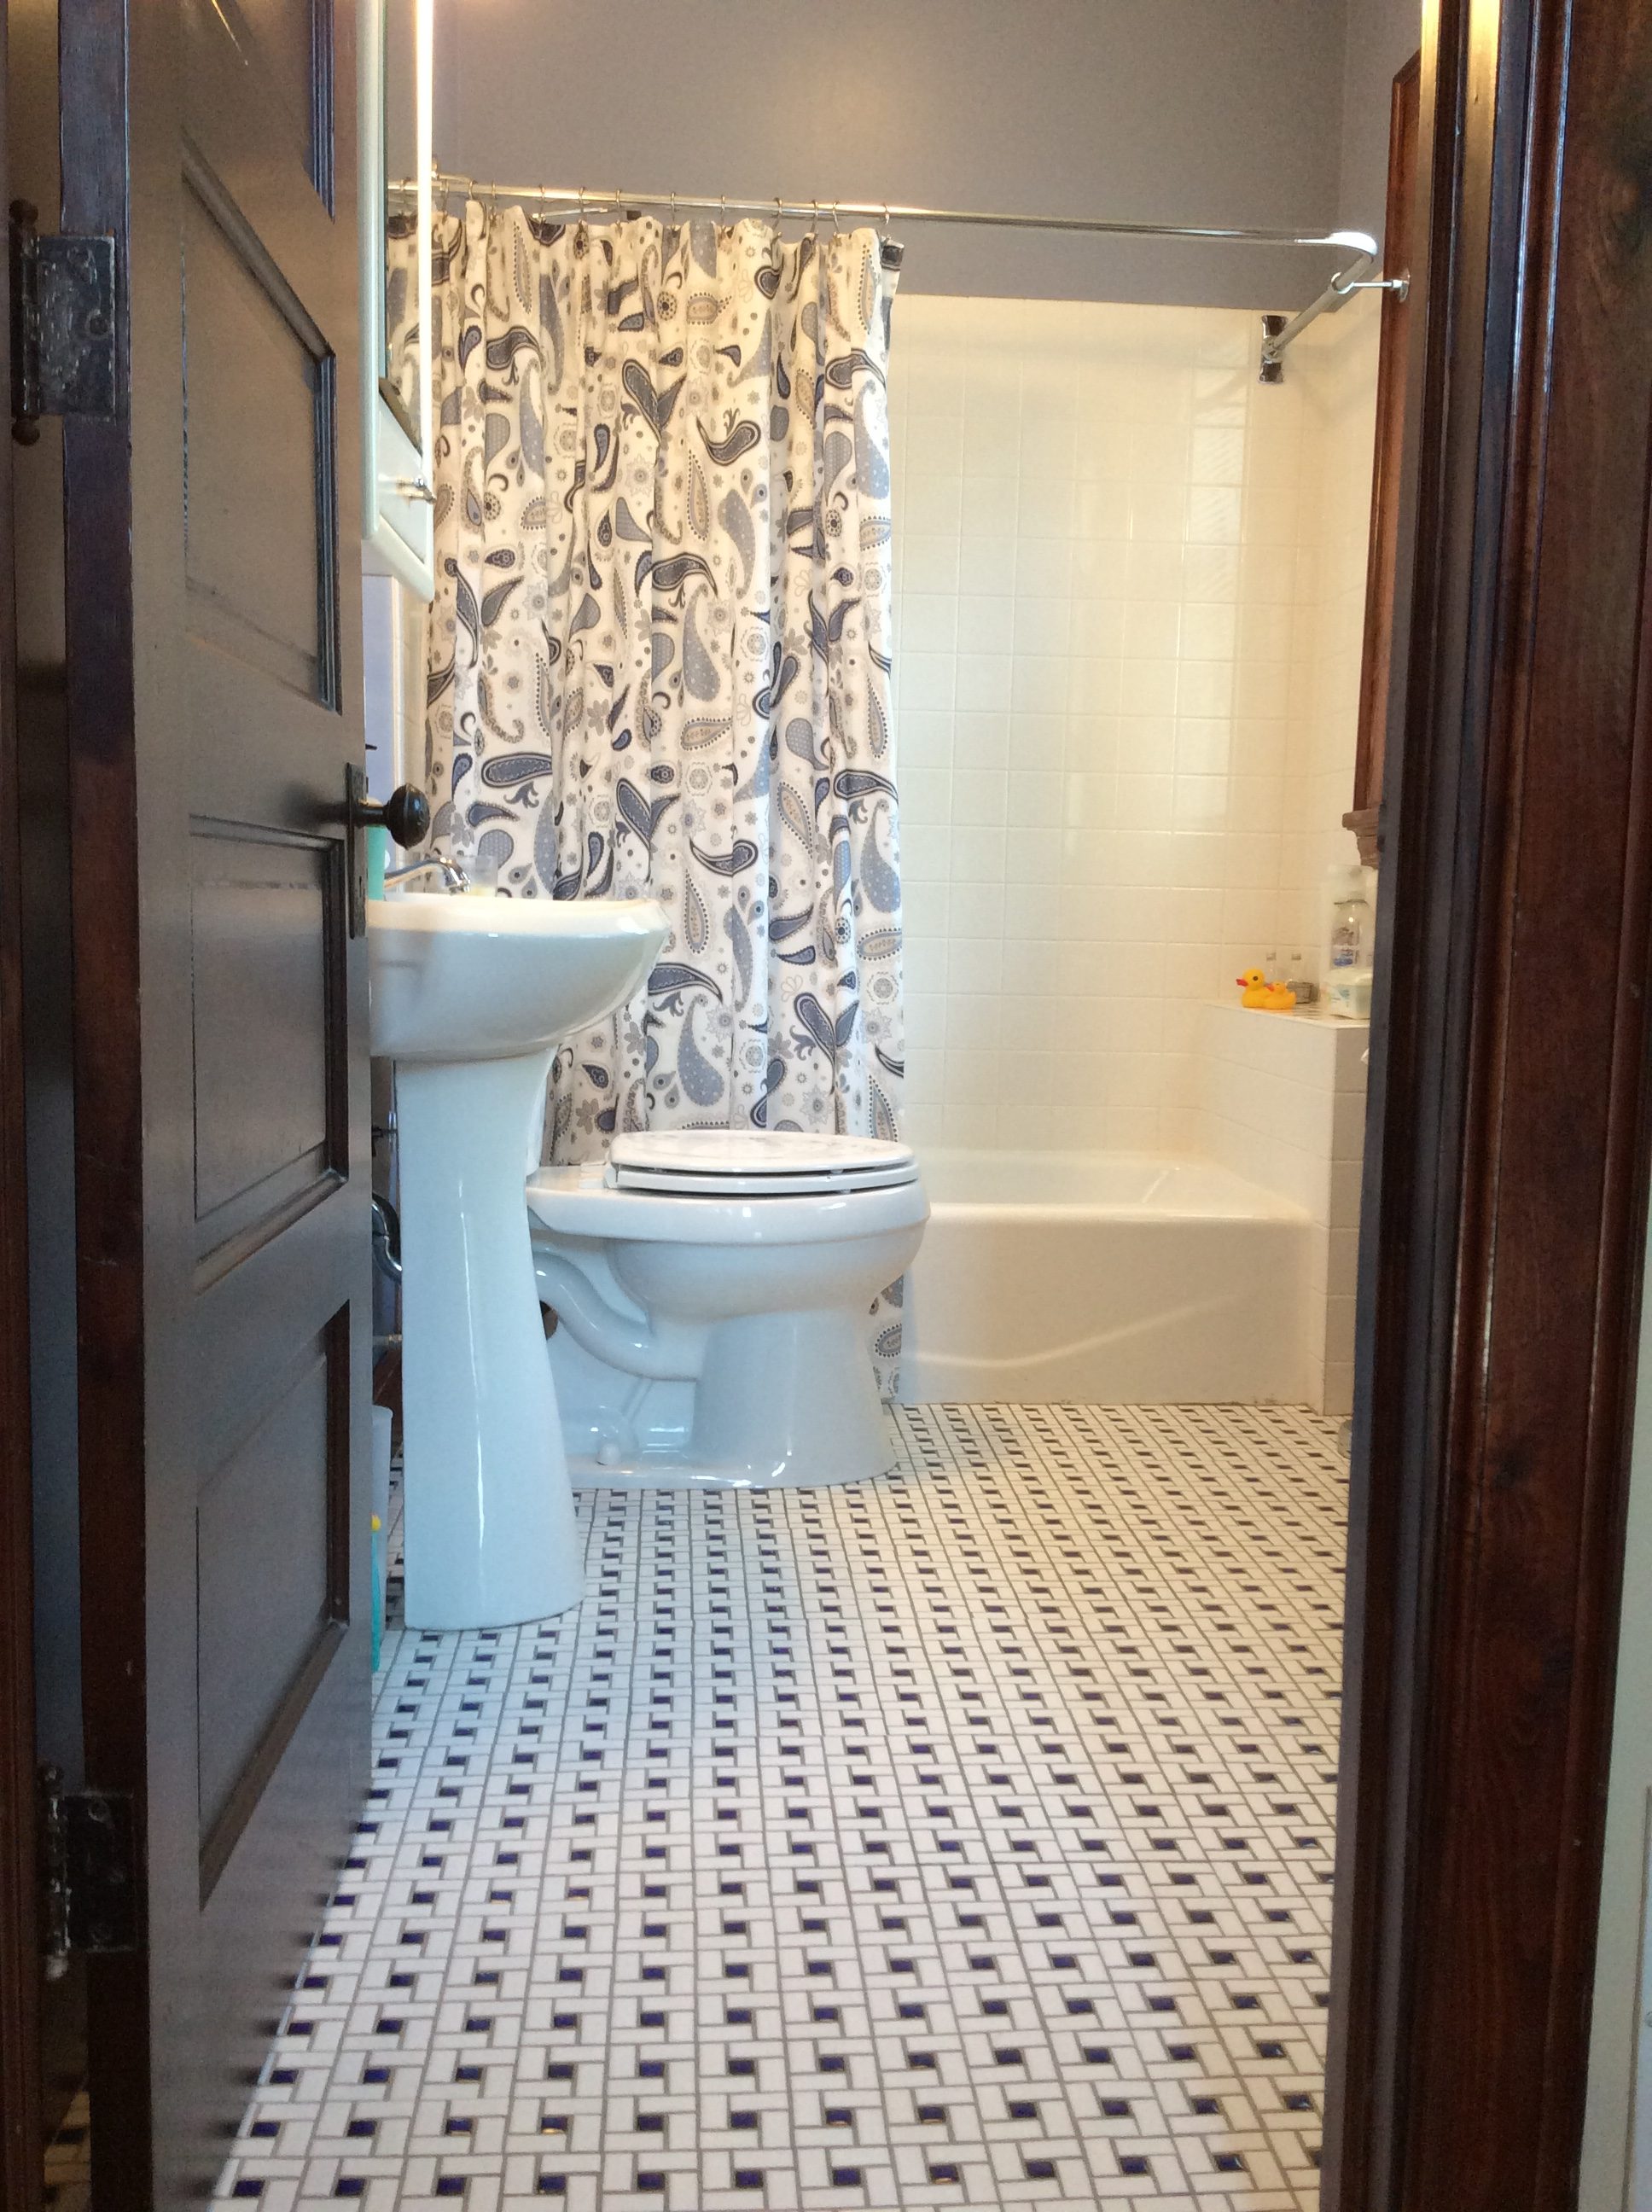 Fresh, clean tiled bathroom with rain shower head.